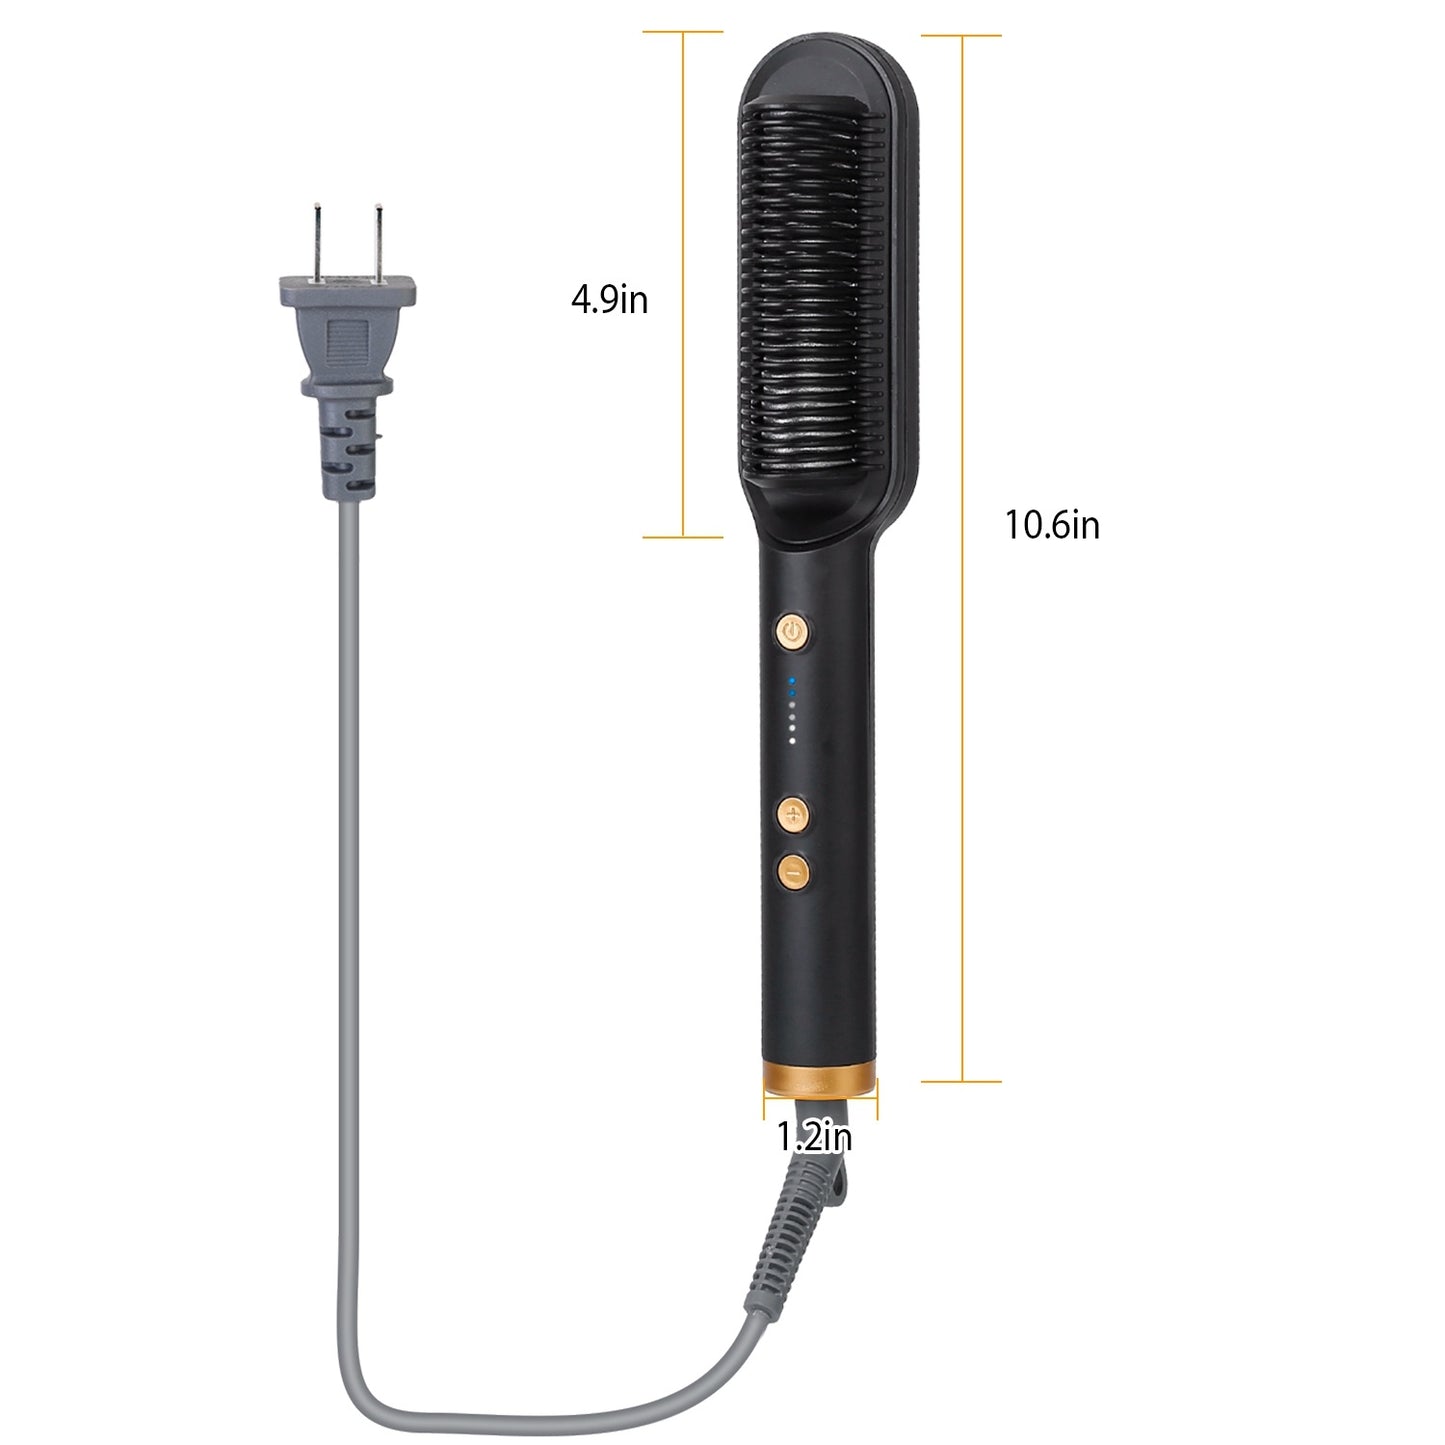 Electric Hair Straightener Brush Straightening Curler Brush Hot Comb 5 Temperature Adjustment 10S Fast Heating